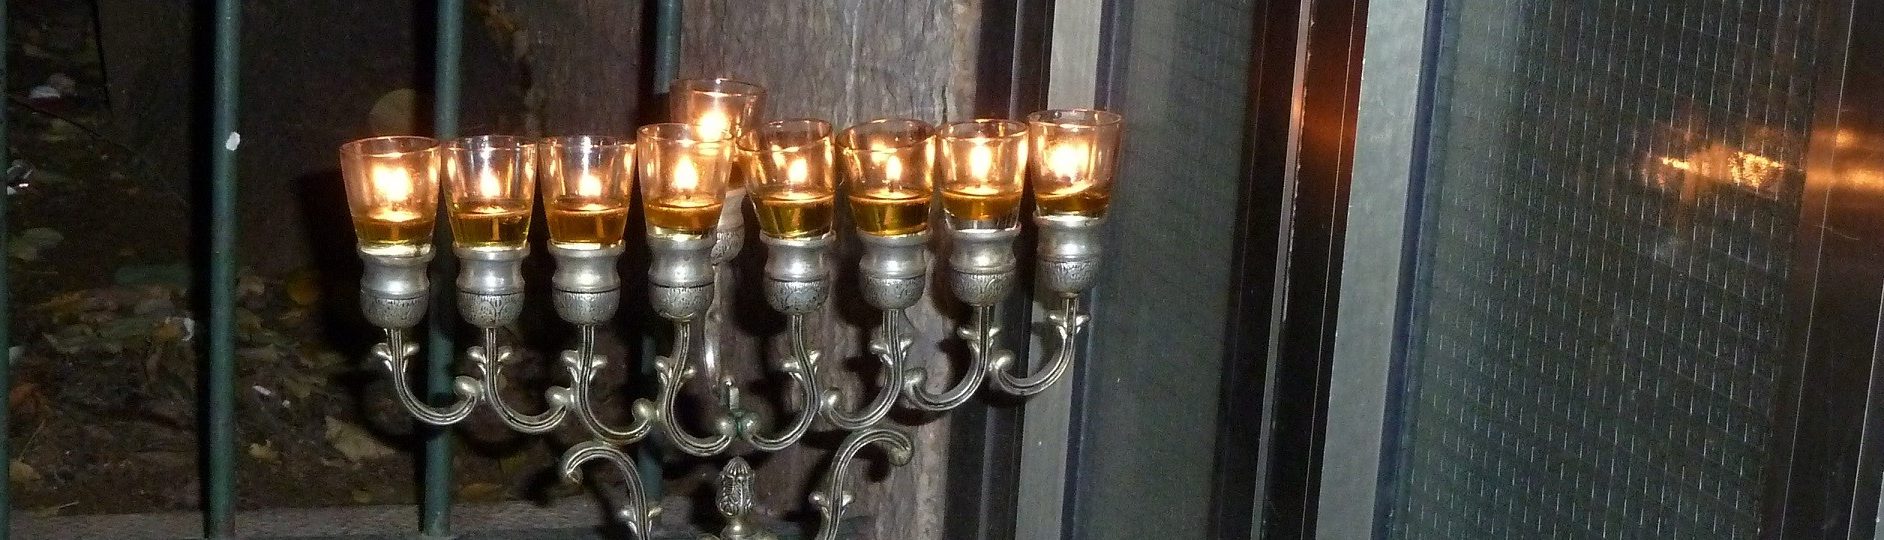 Old_Jerusalem_candlestick_with_oil_lamps - Copy